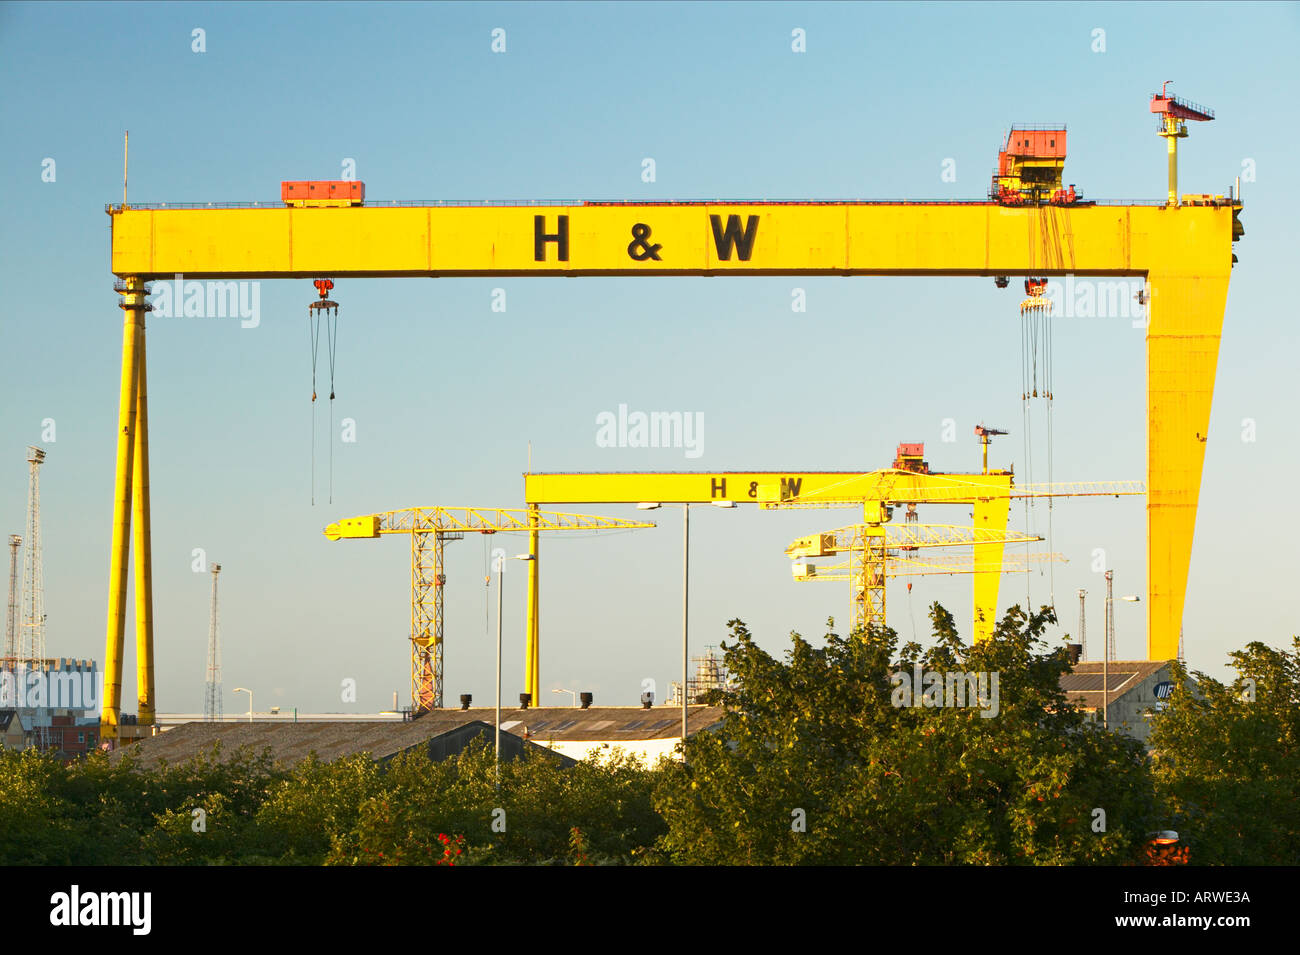 Harland Wolff shipyard cranes Samson and Goliath, Belfast, Northern Ireland. Prominent Belfast skyline feature Stock Photo